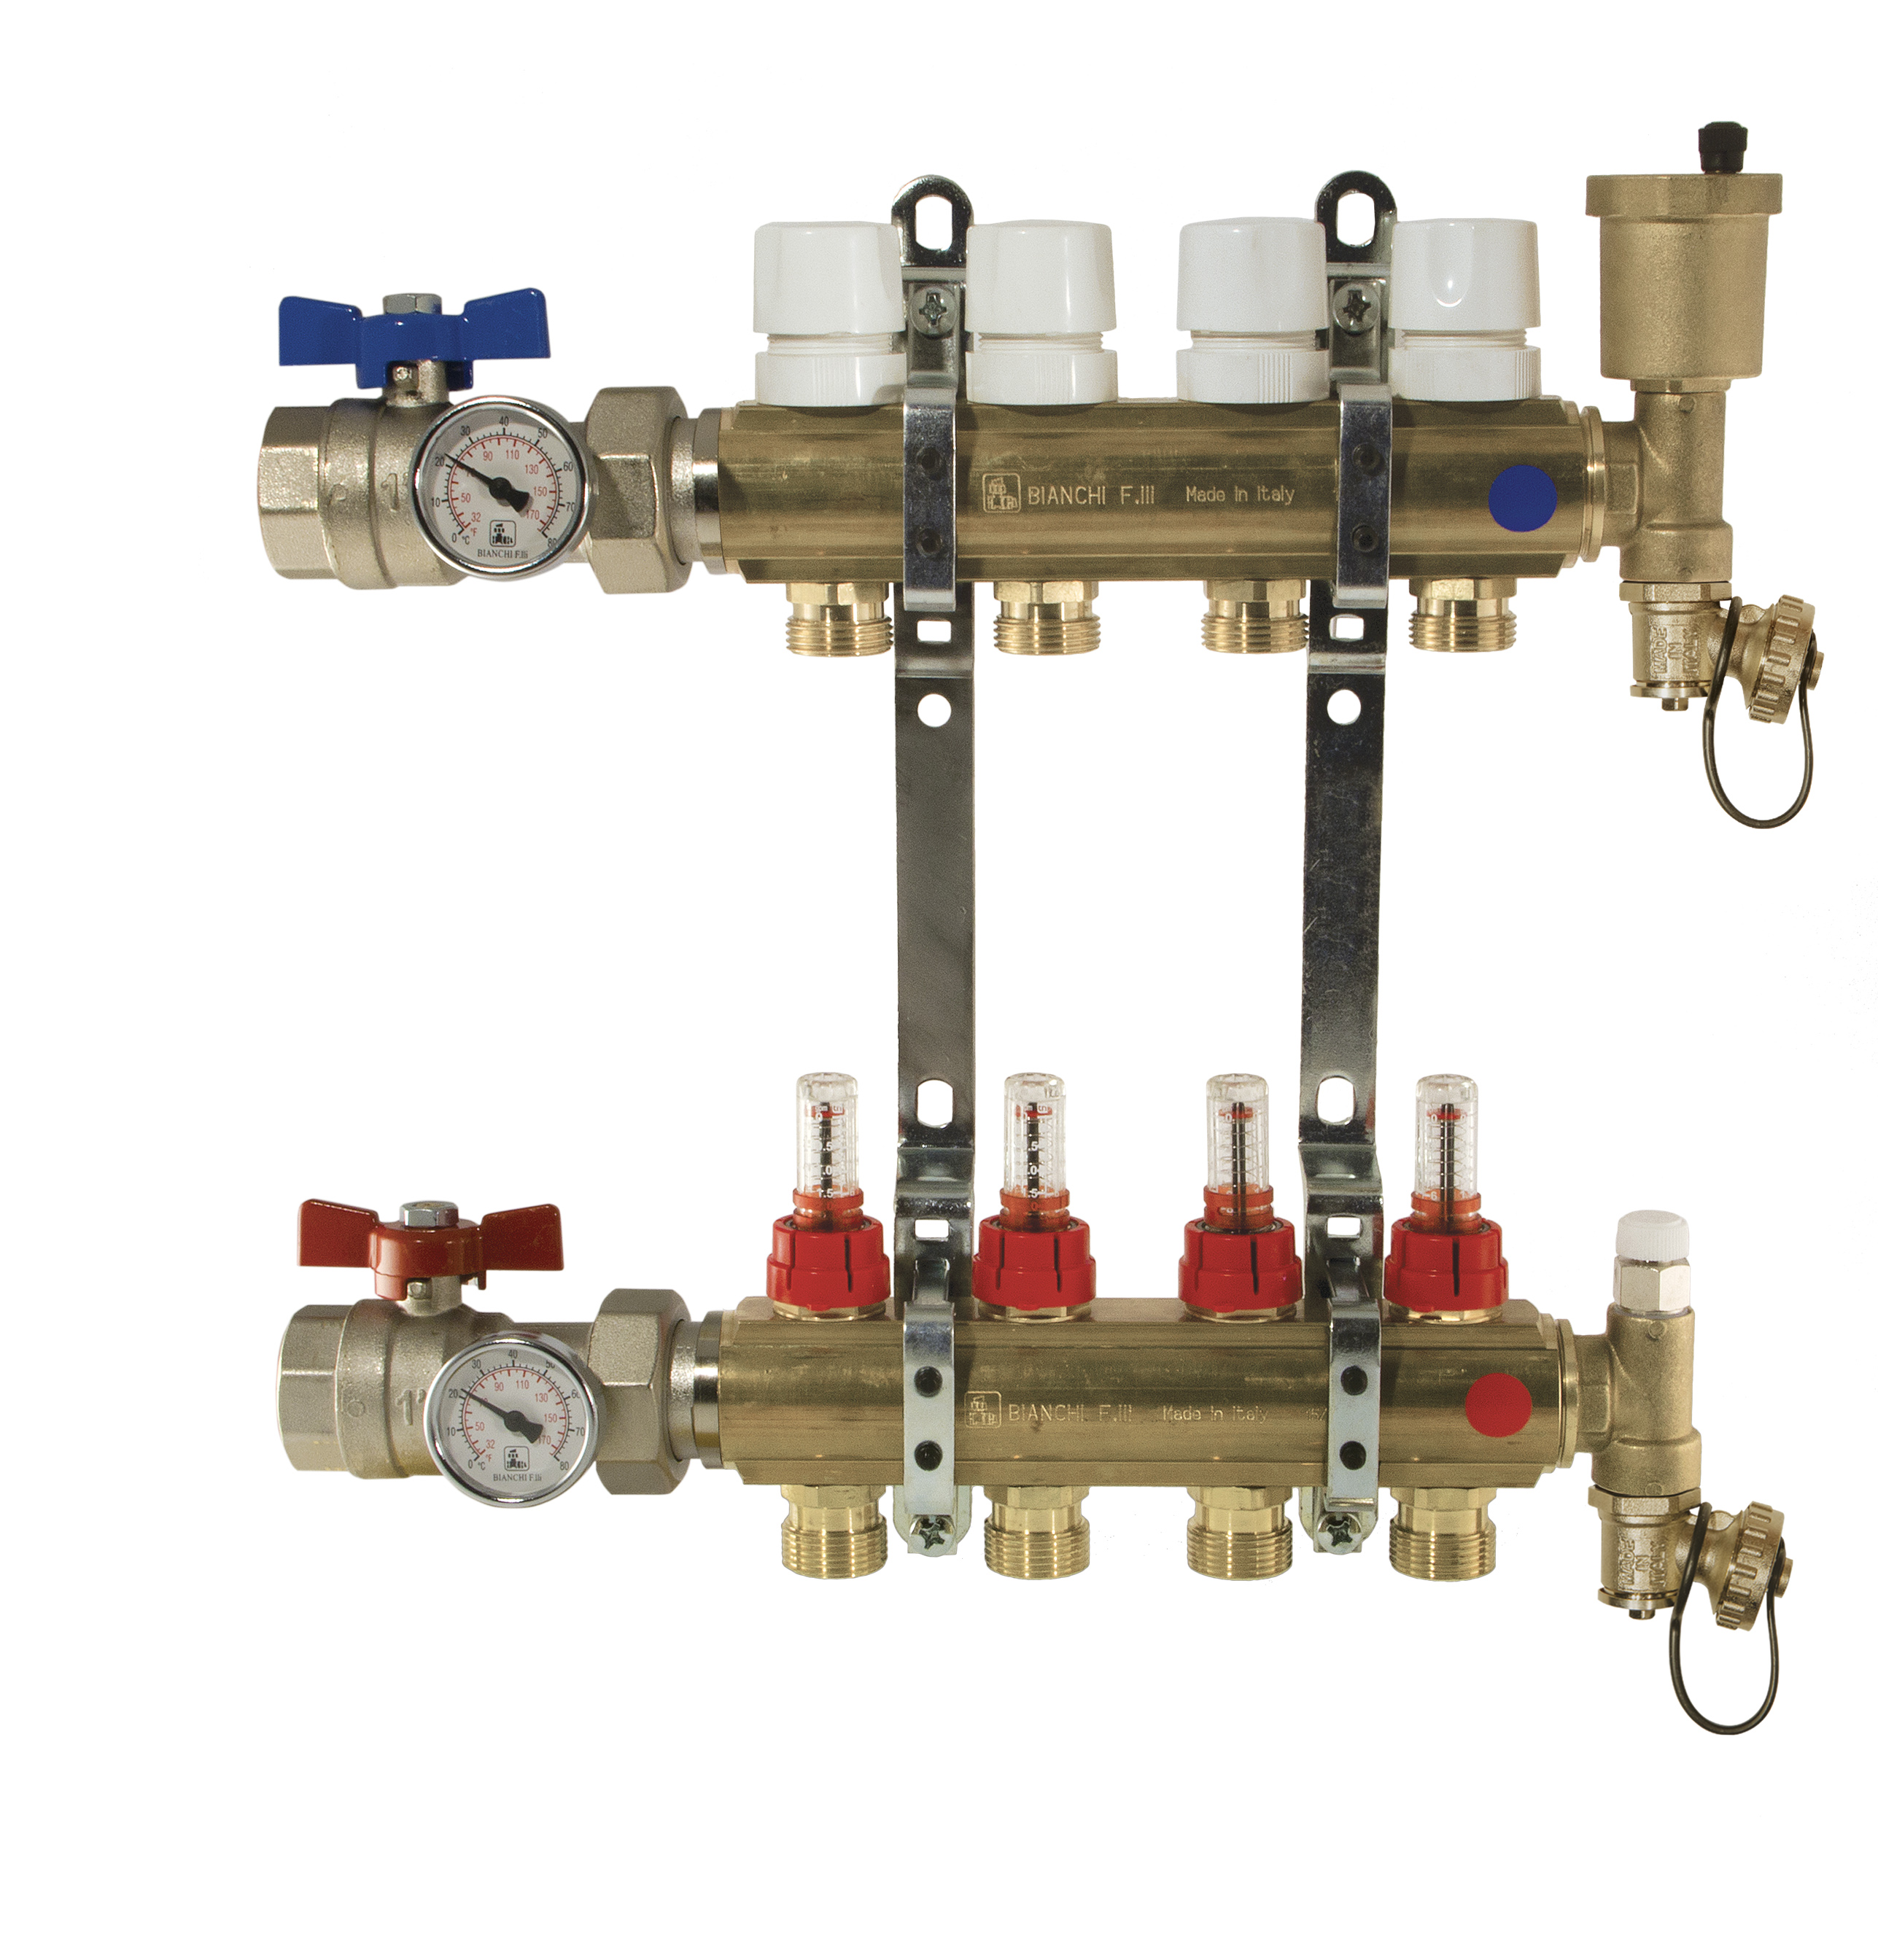 Brass manifolds therm. valves and flowmeters, valves, disch.